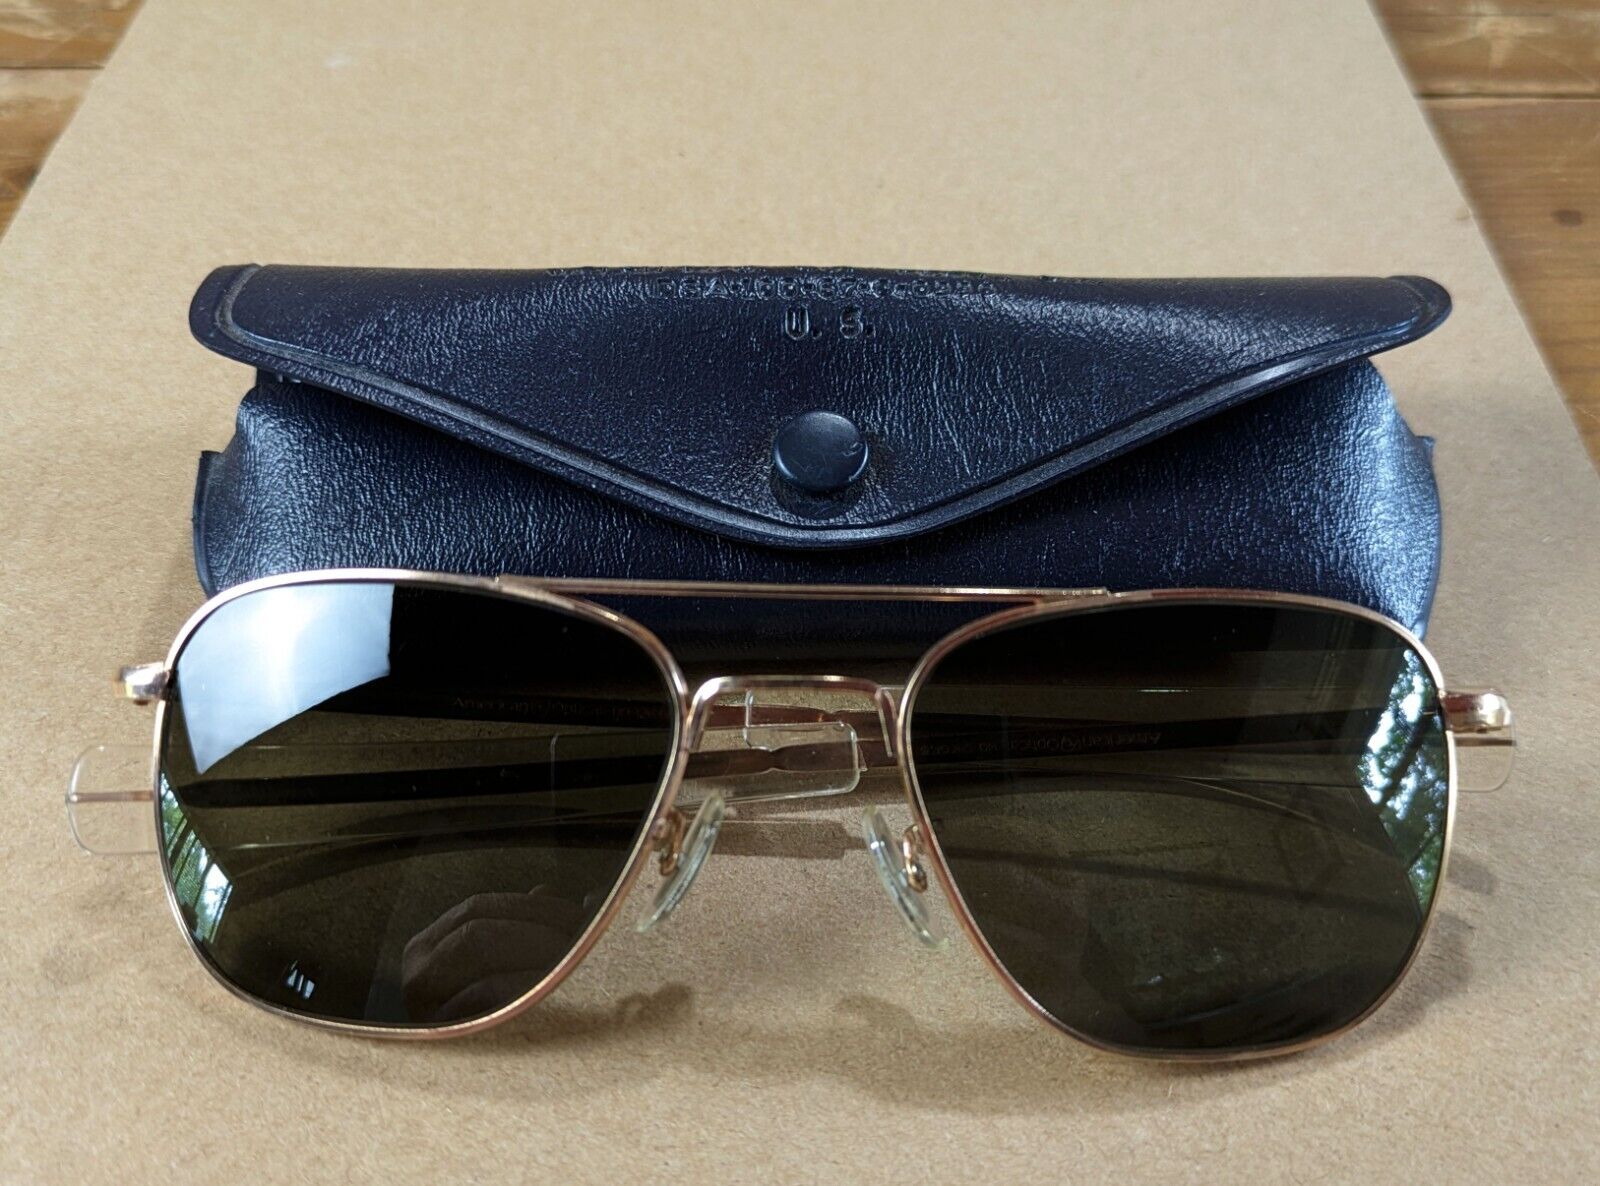 Vtg NOS 1967 American Optical 1/10 12K GF Pilot Sunglasses & Case. NEW